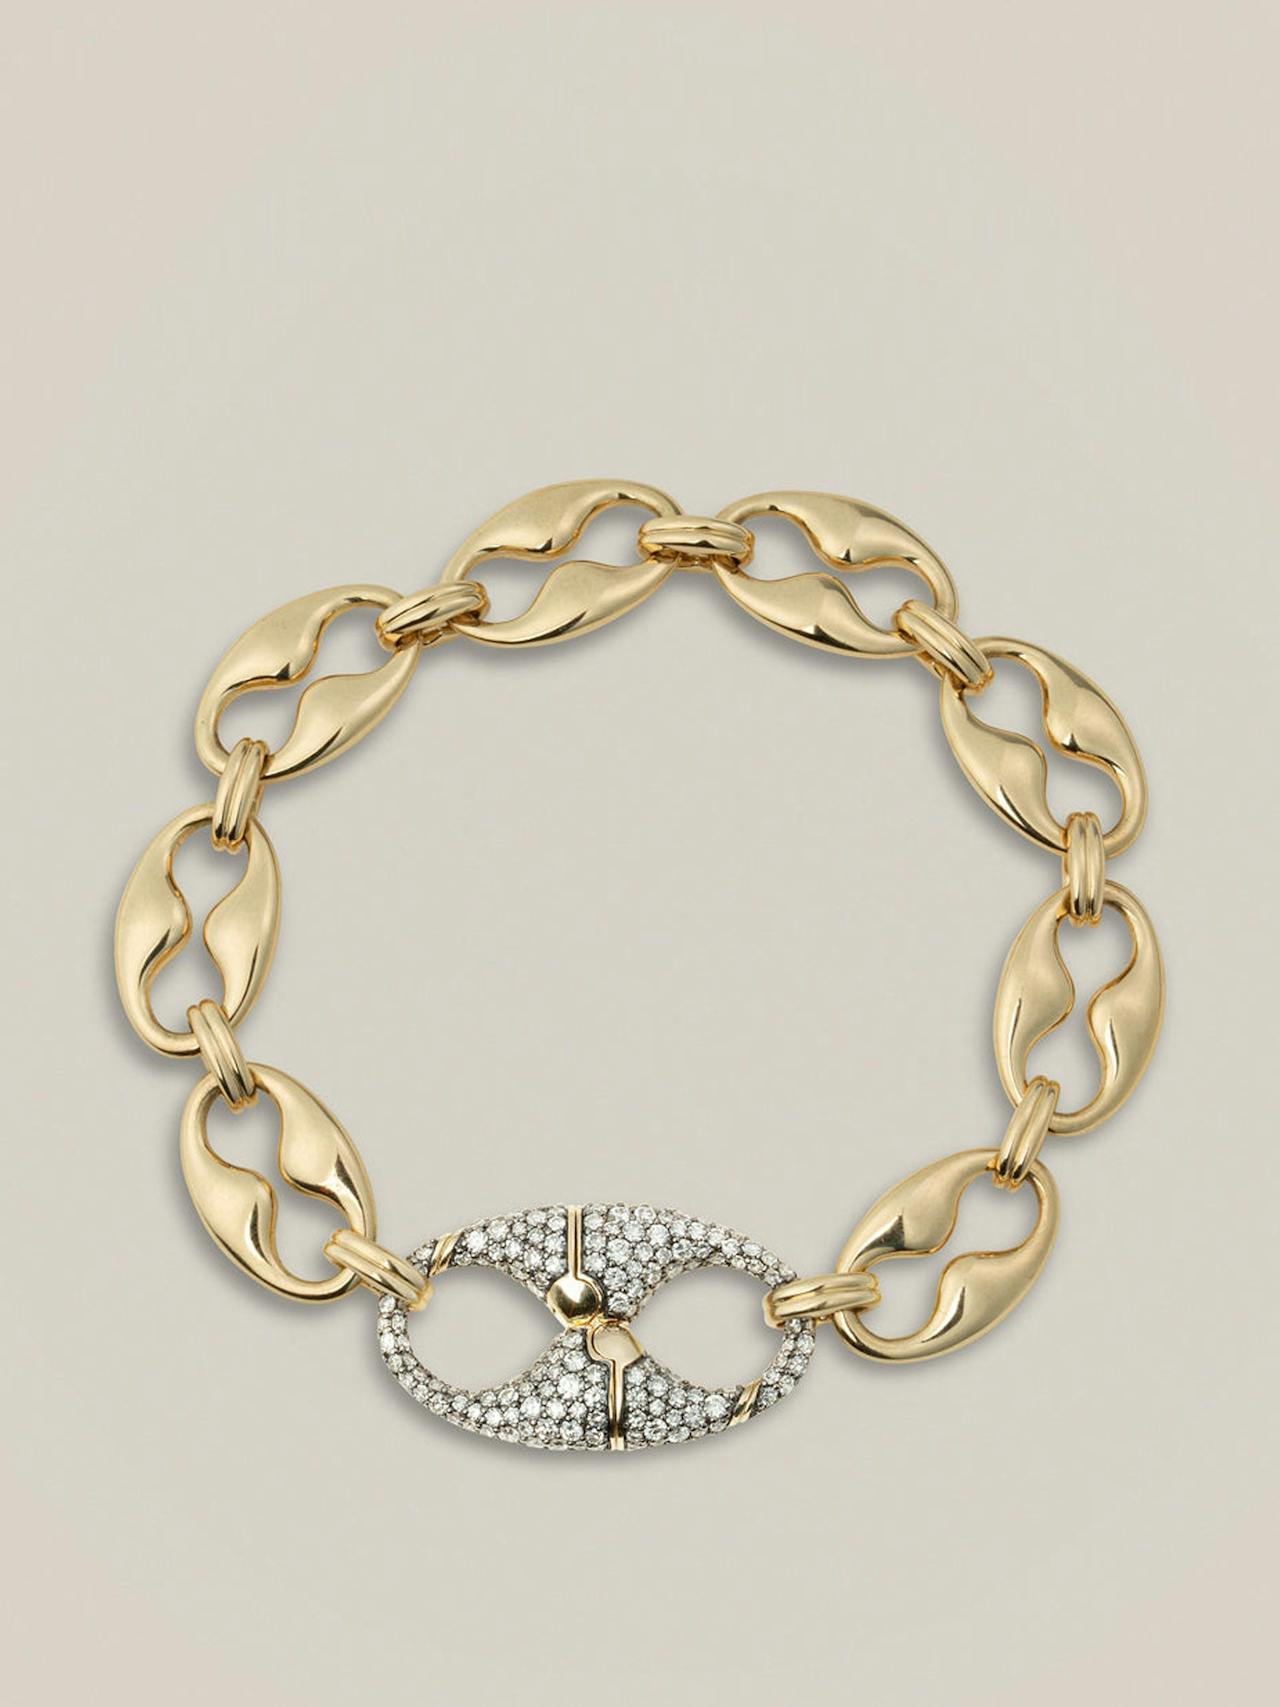 Persephone diamond bracelet